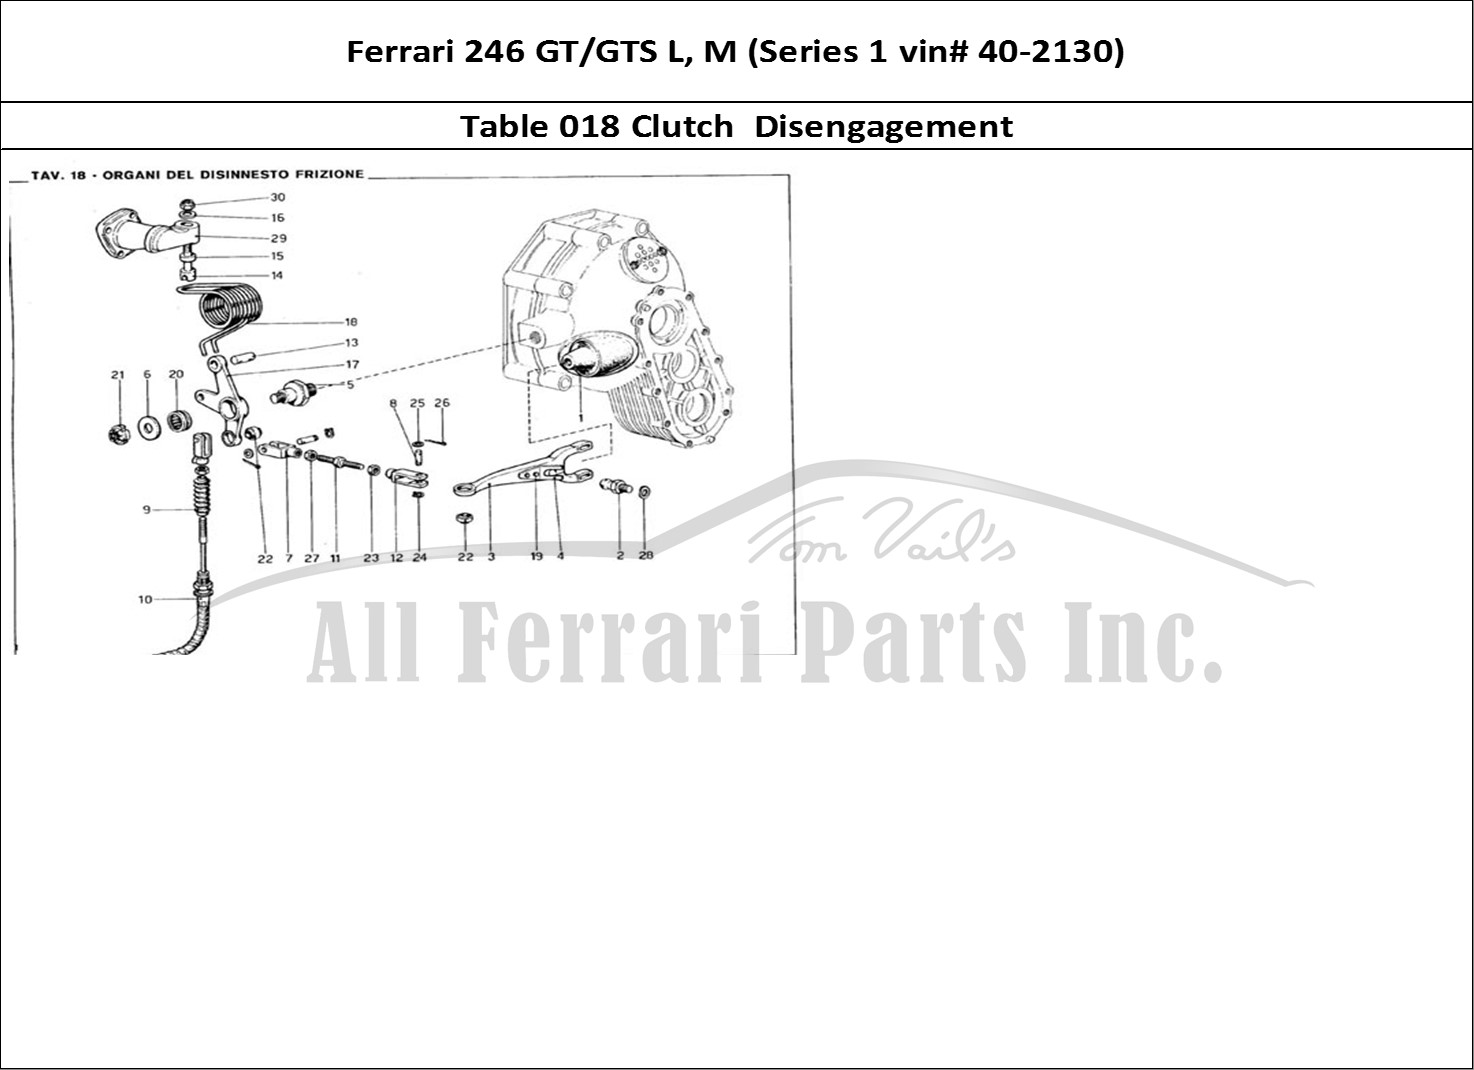 Ferrari Parts Ferrari 246 GT Series 1 Page 018 Clutch Disengagement